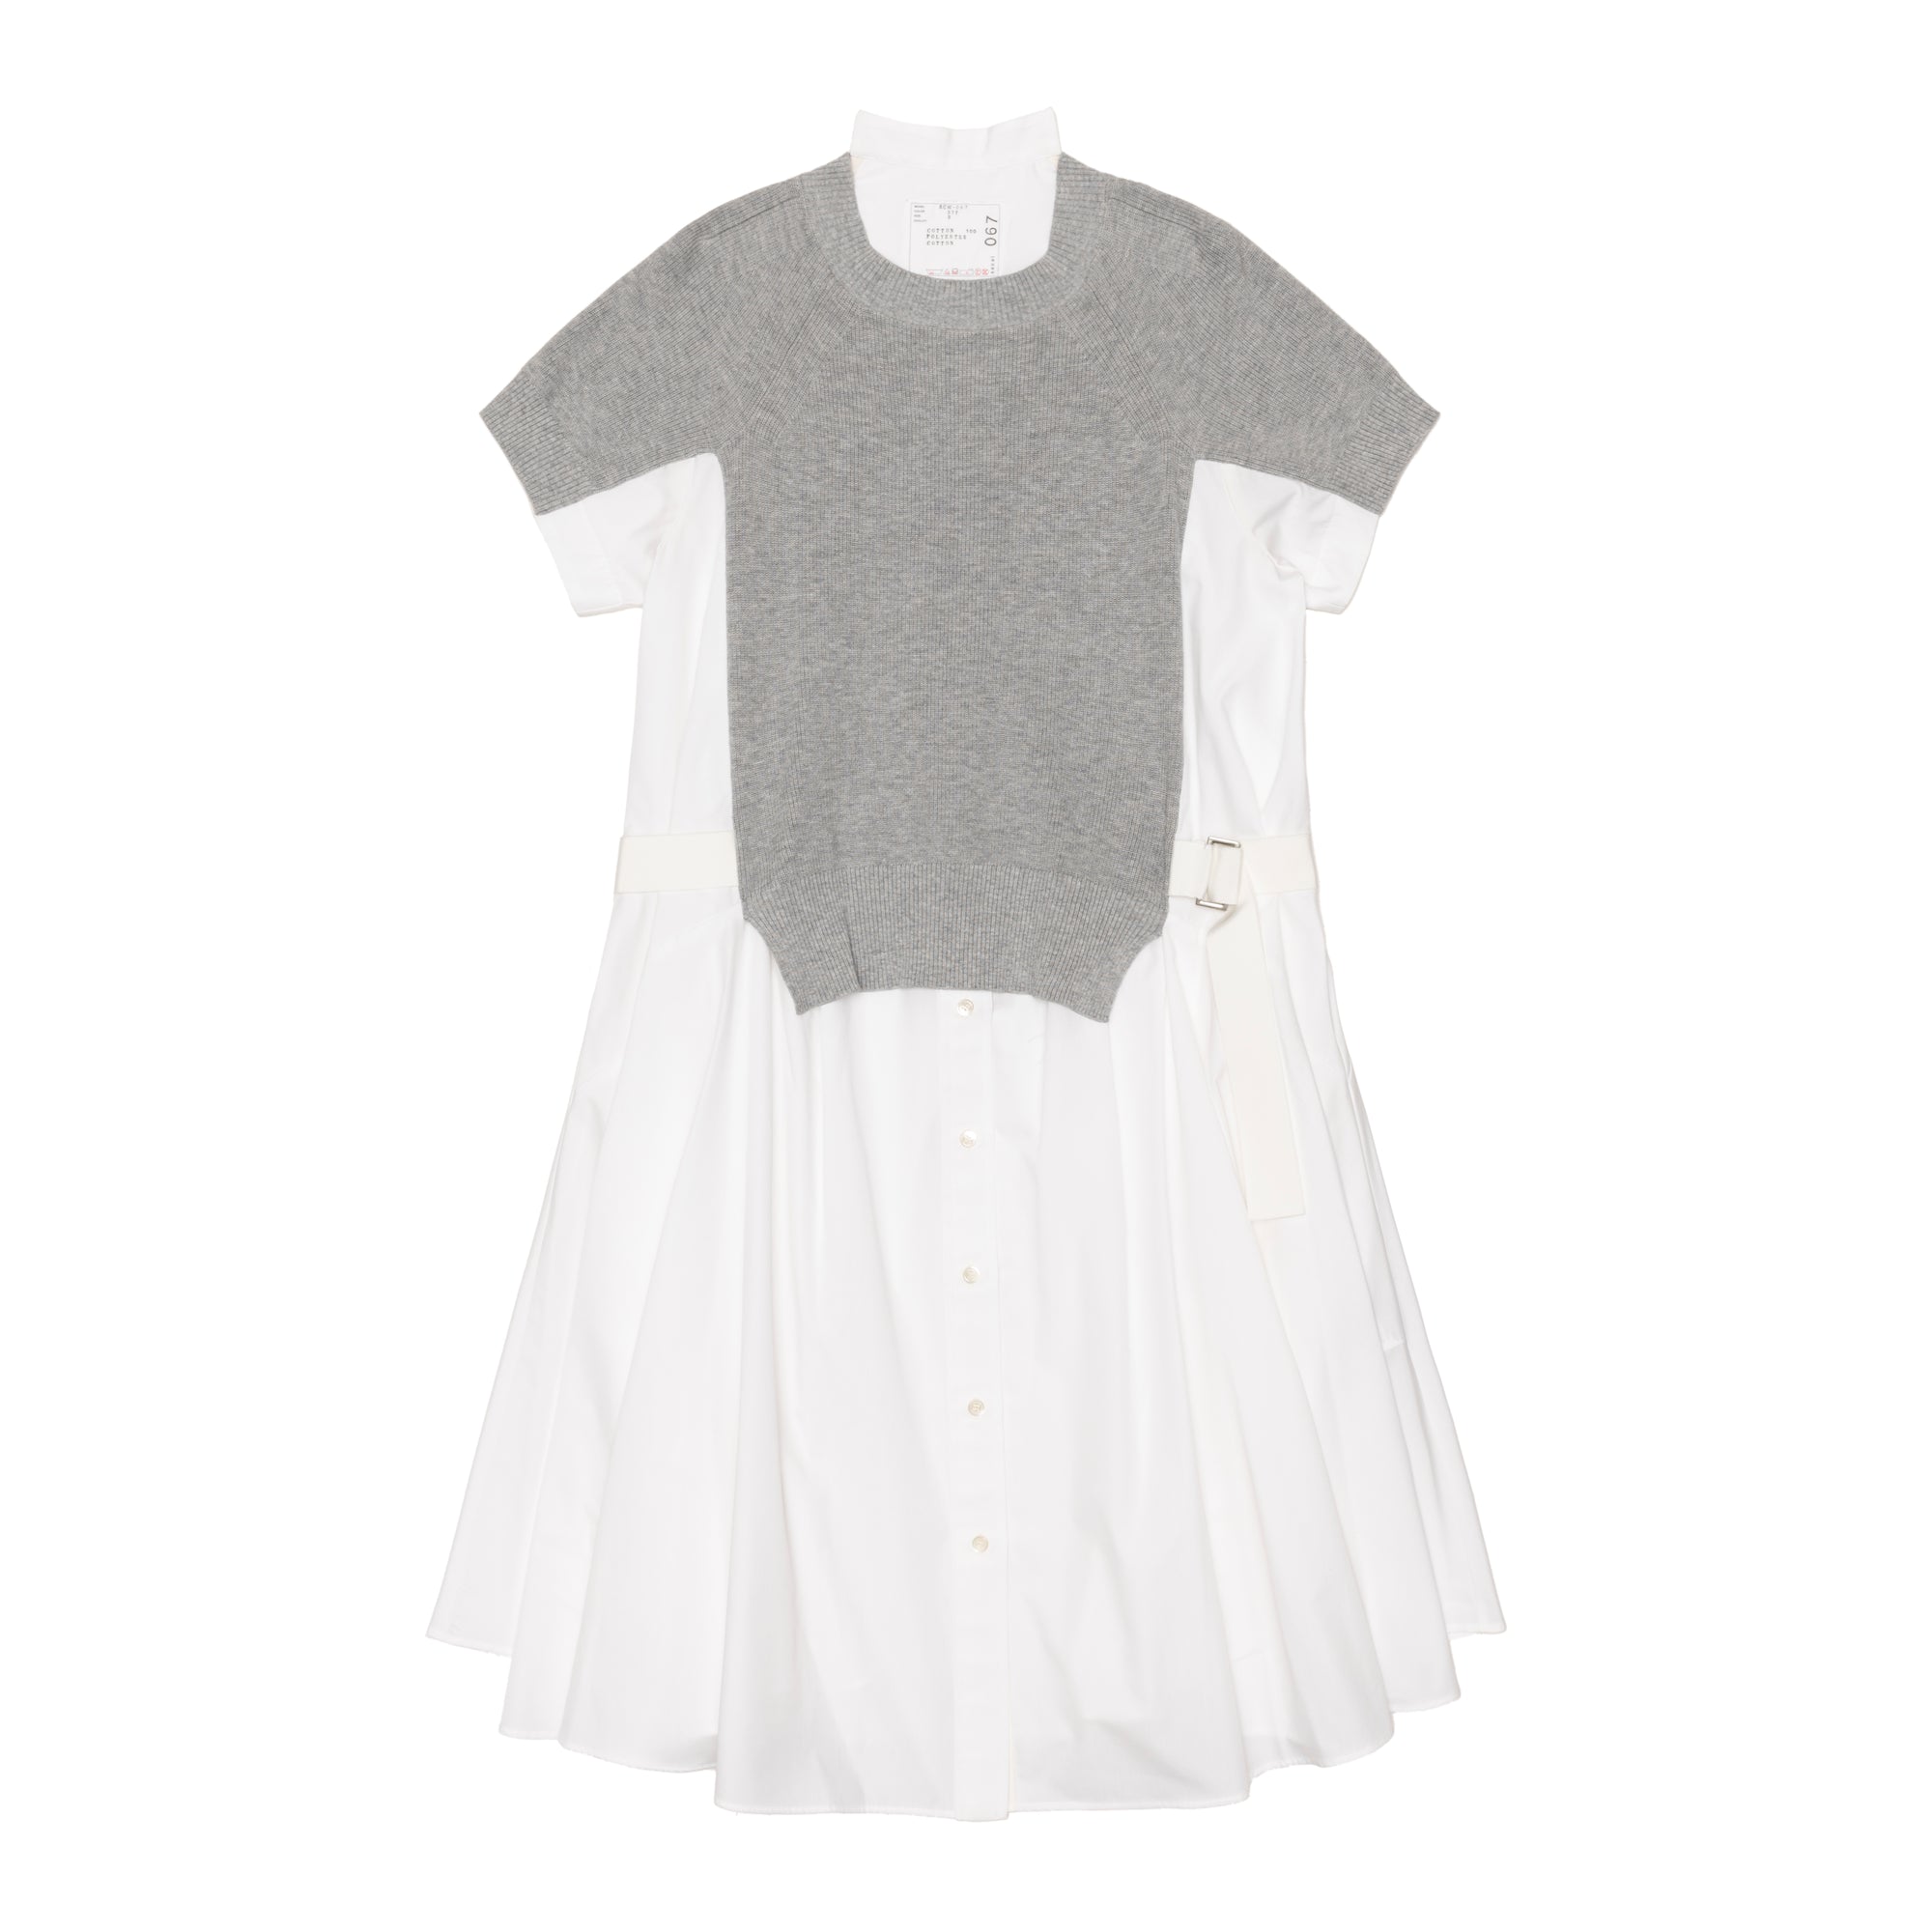 SACAI - Pre Cotton Knit Dress - (Light Gray) view 1